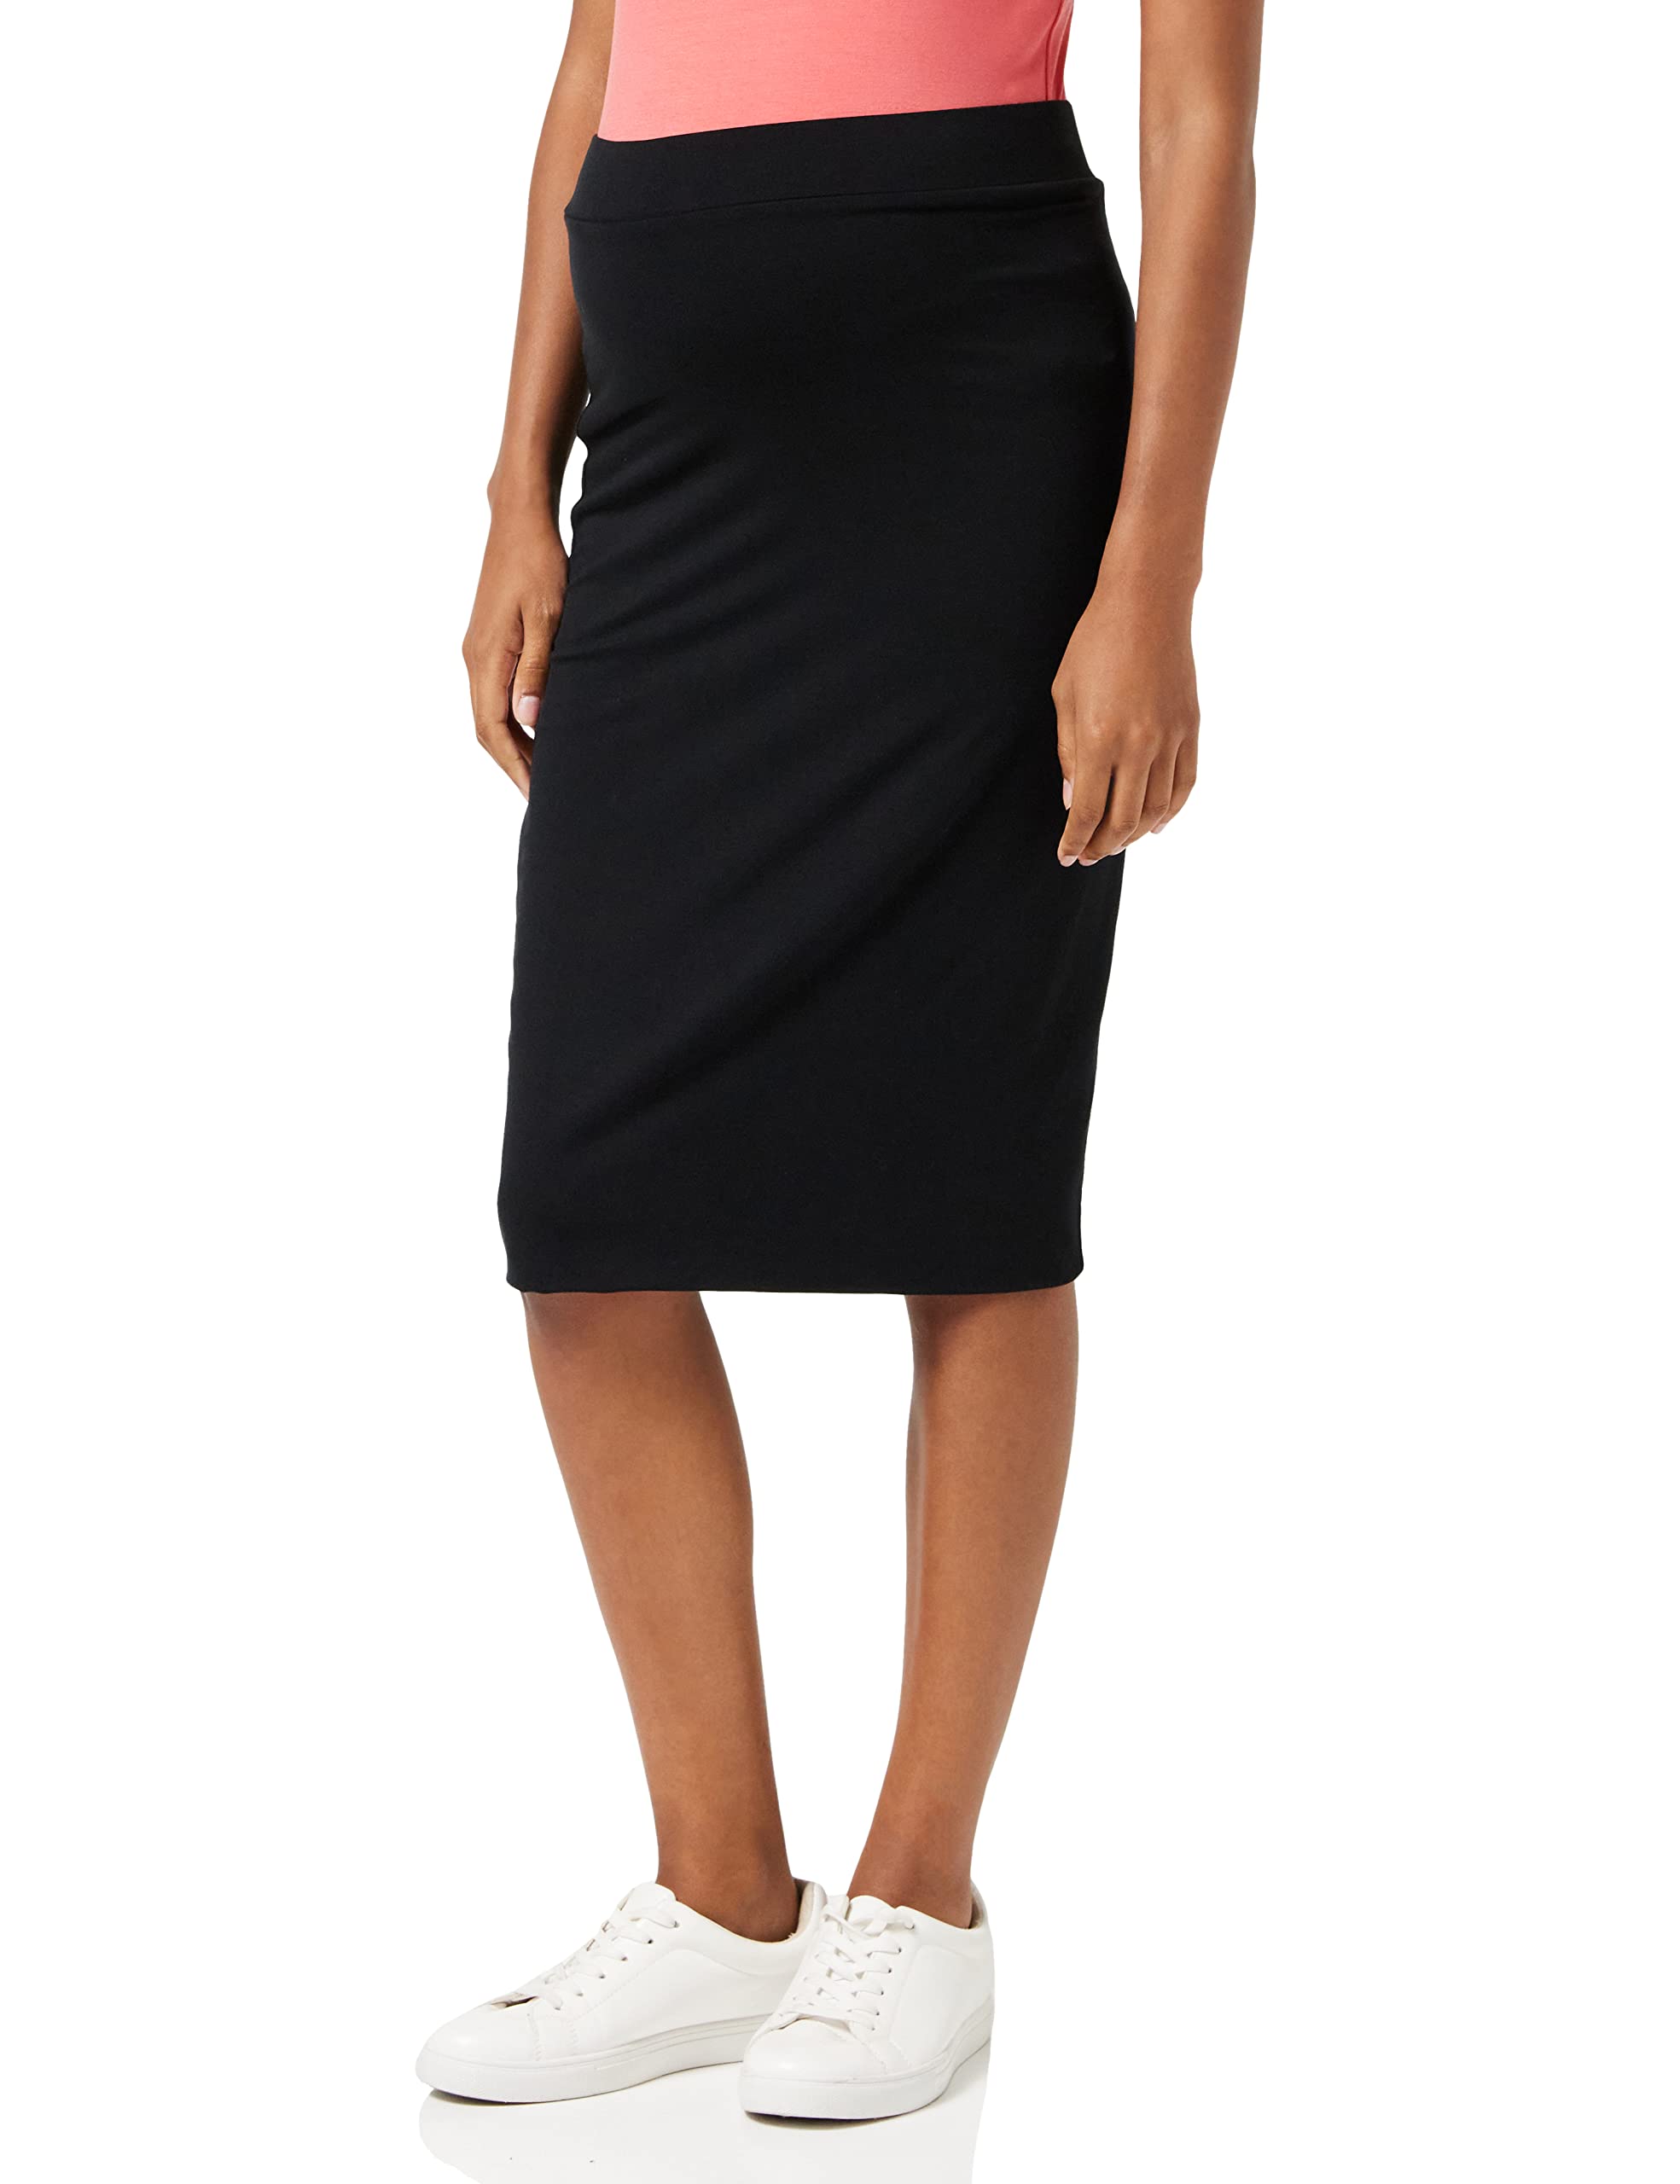 Noppies Damen Skirt Otb Paris Rock, Black, XL EU